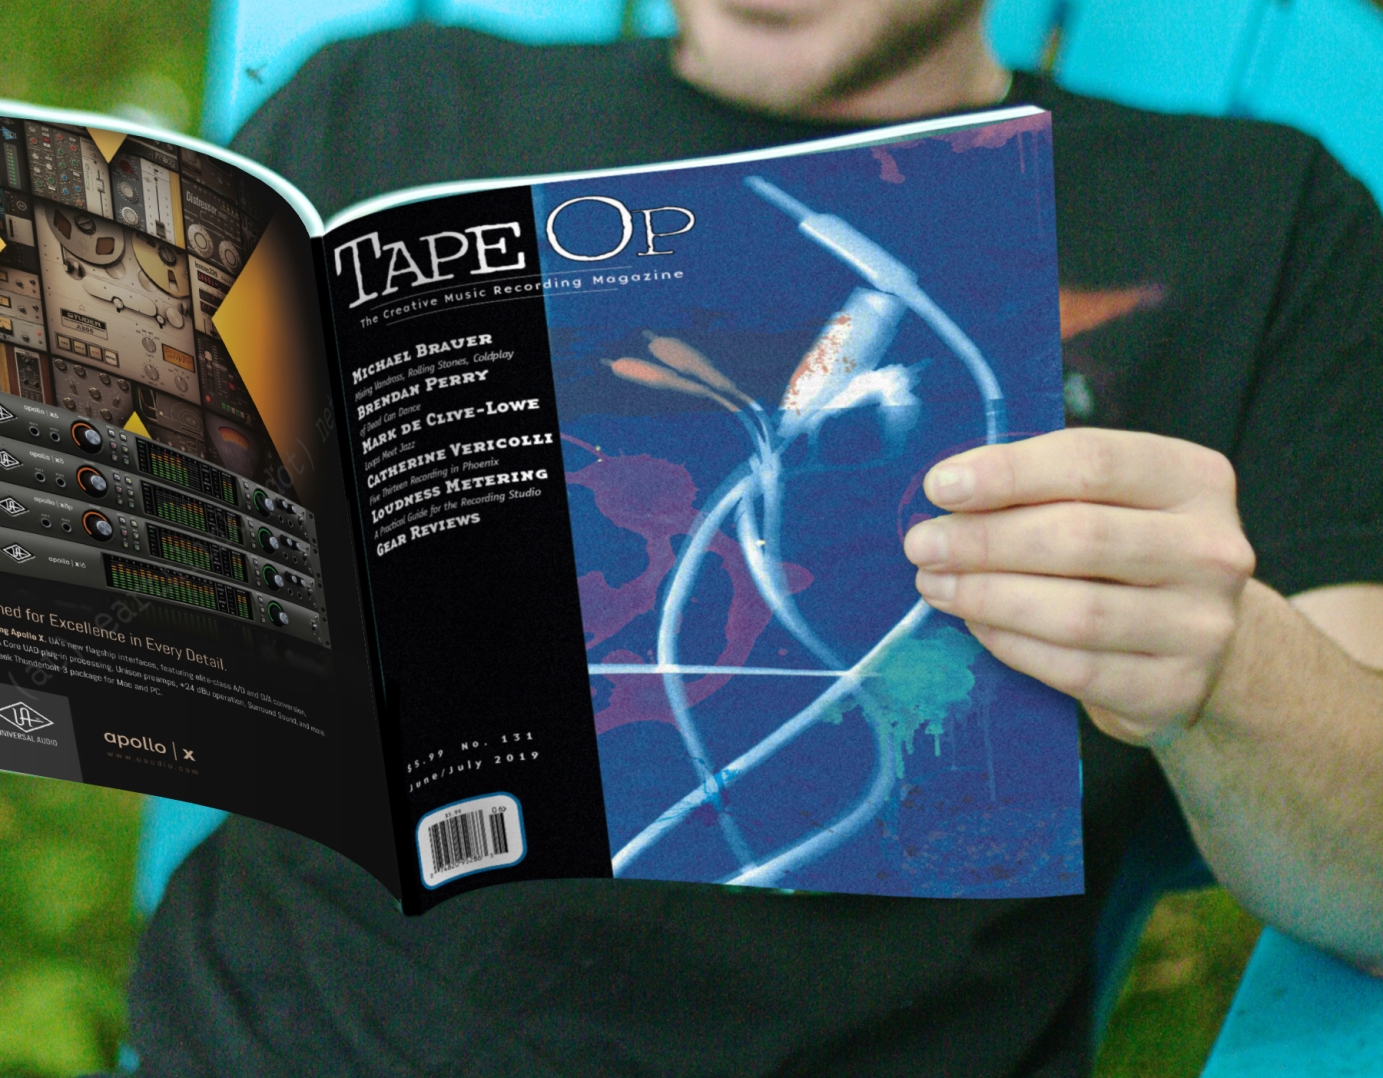 Tape Op magazine cover illustration